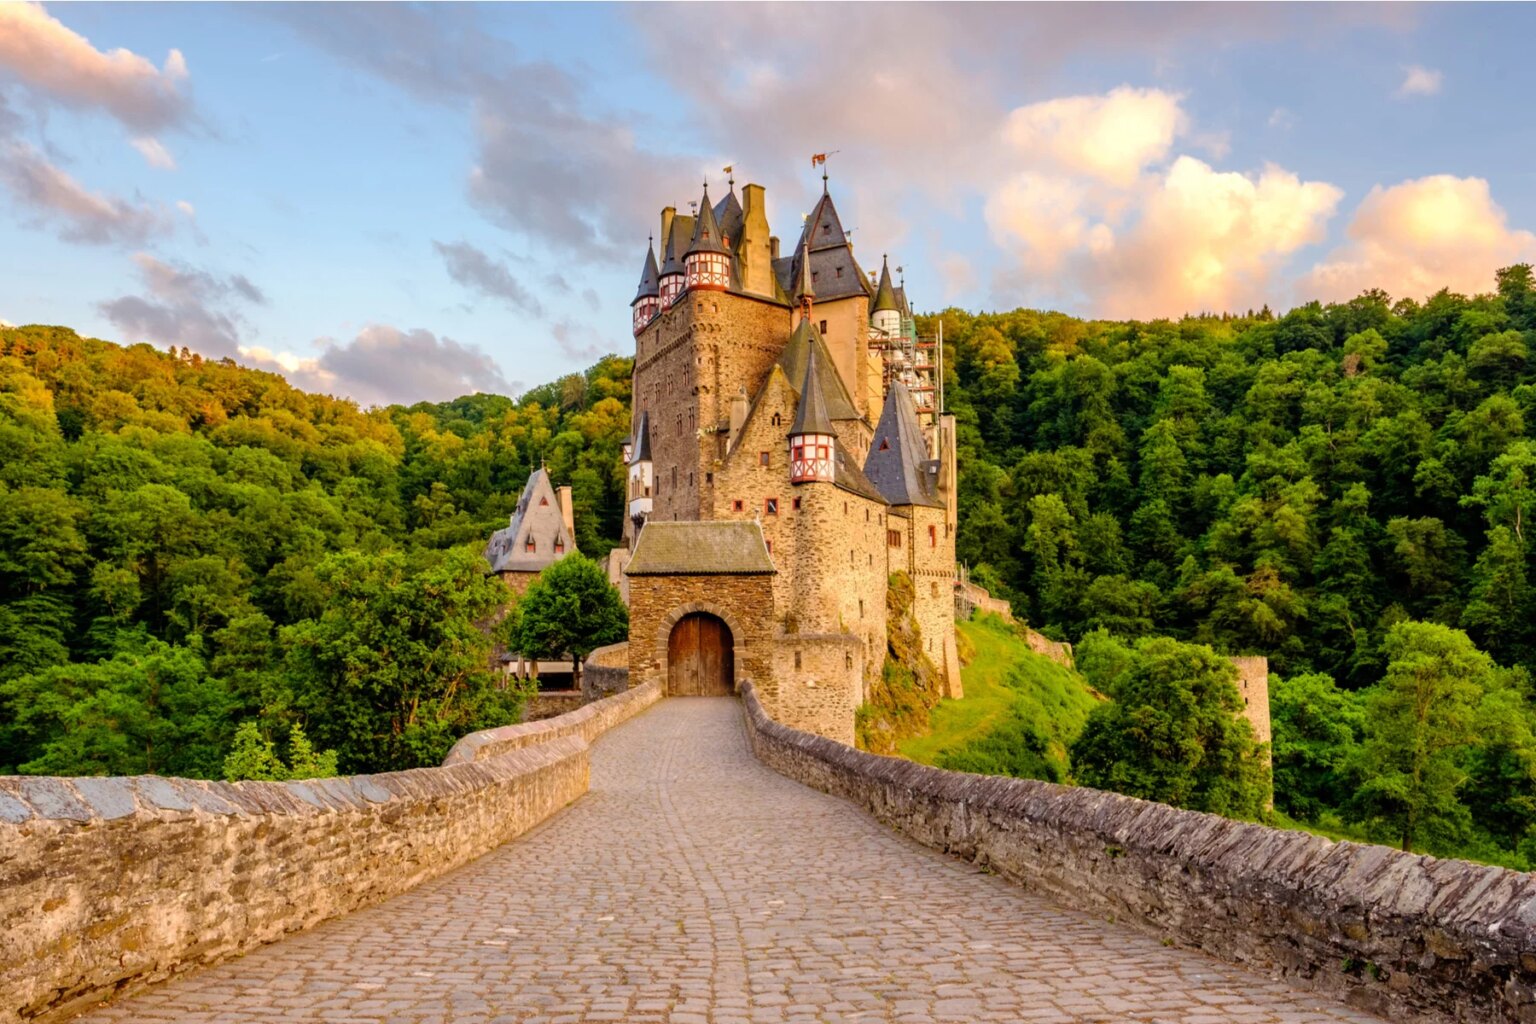 Rhineland castles